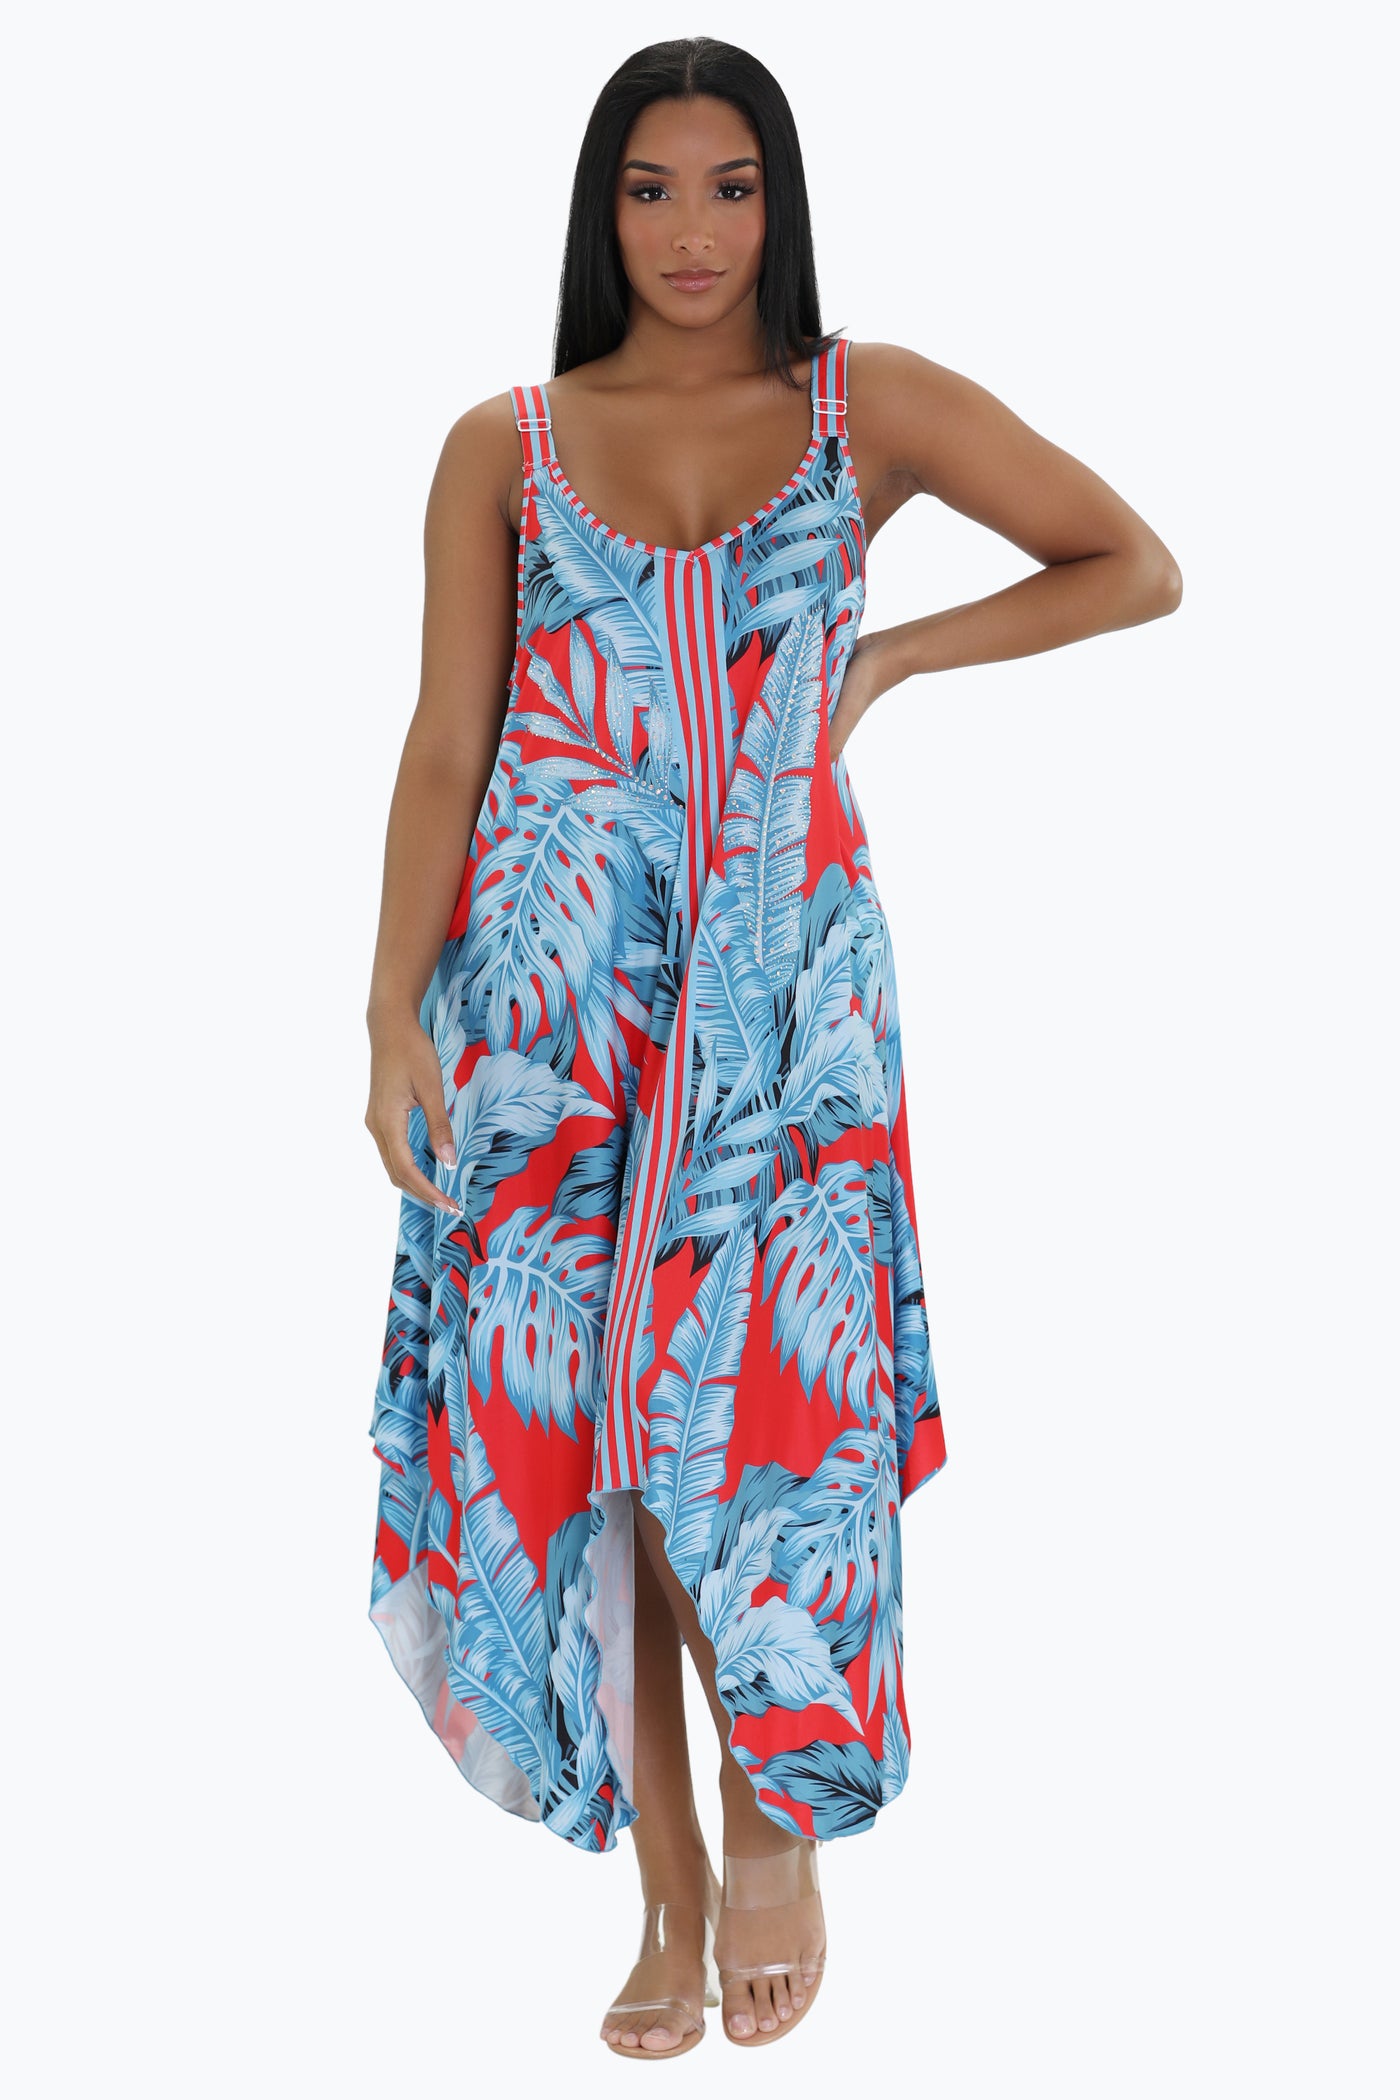 Vice City Print Beach Dress 21243 - Advance Apparels Inc